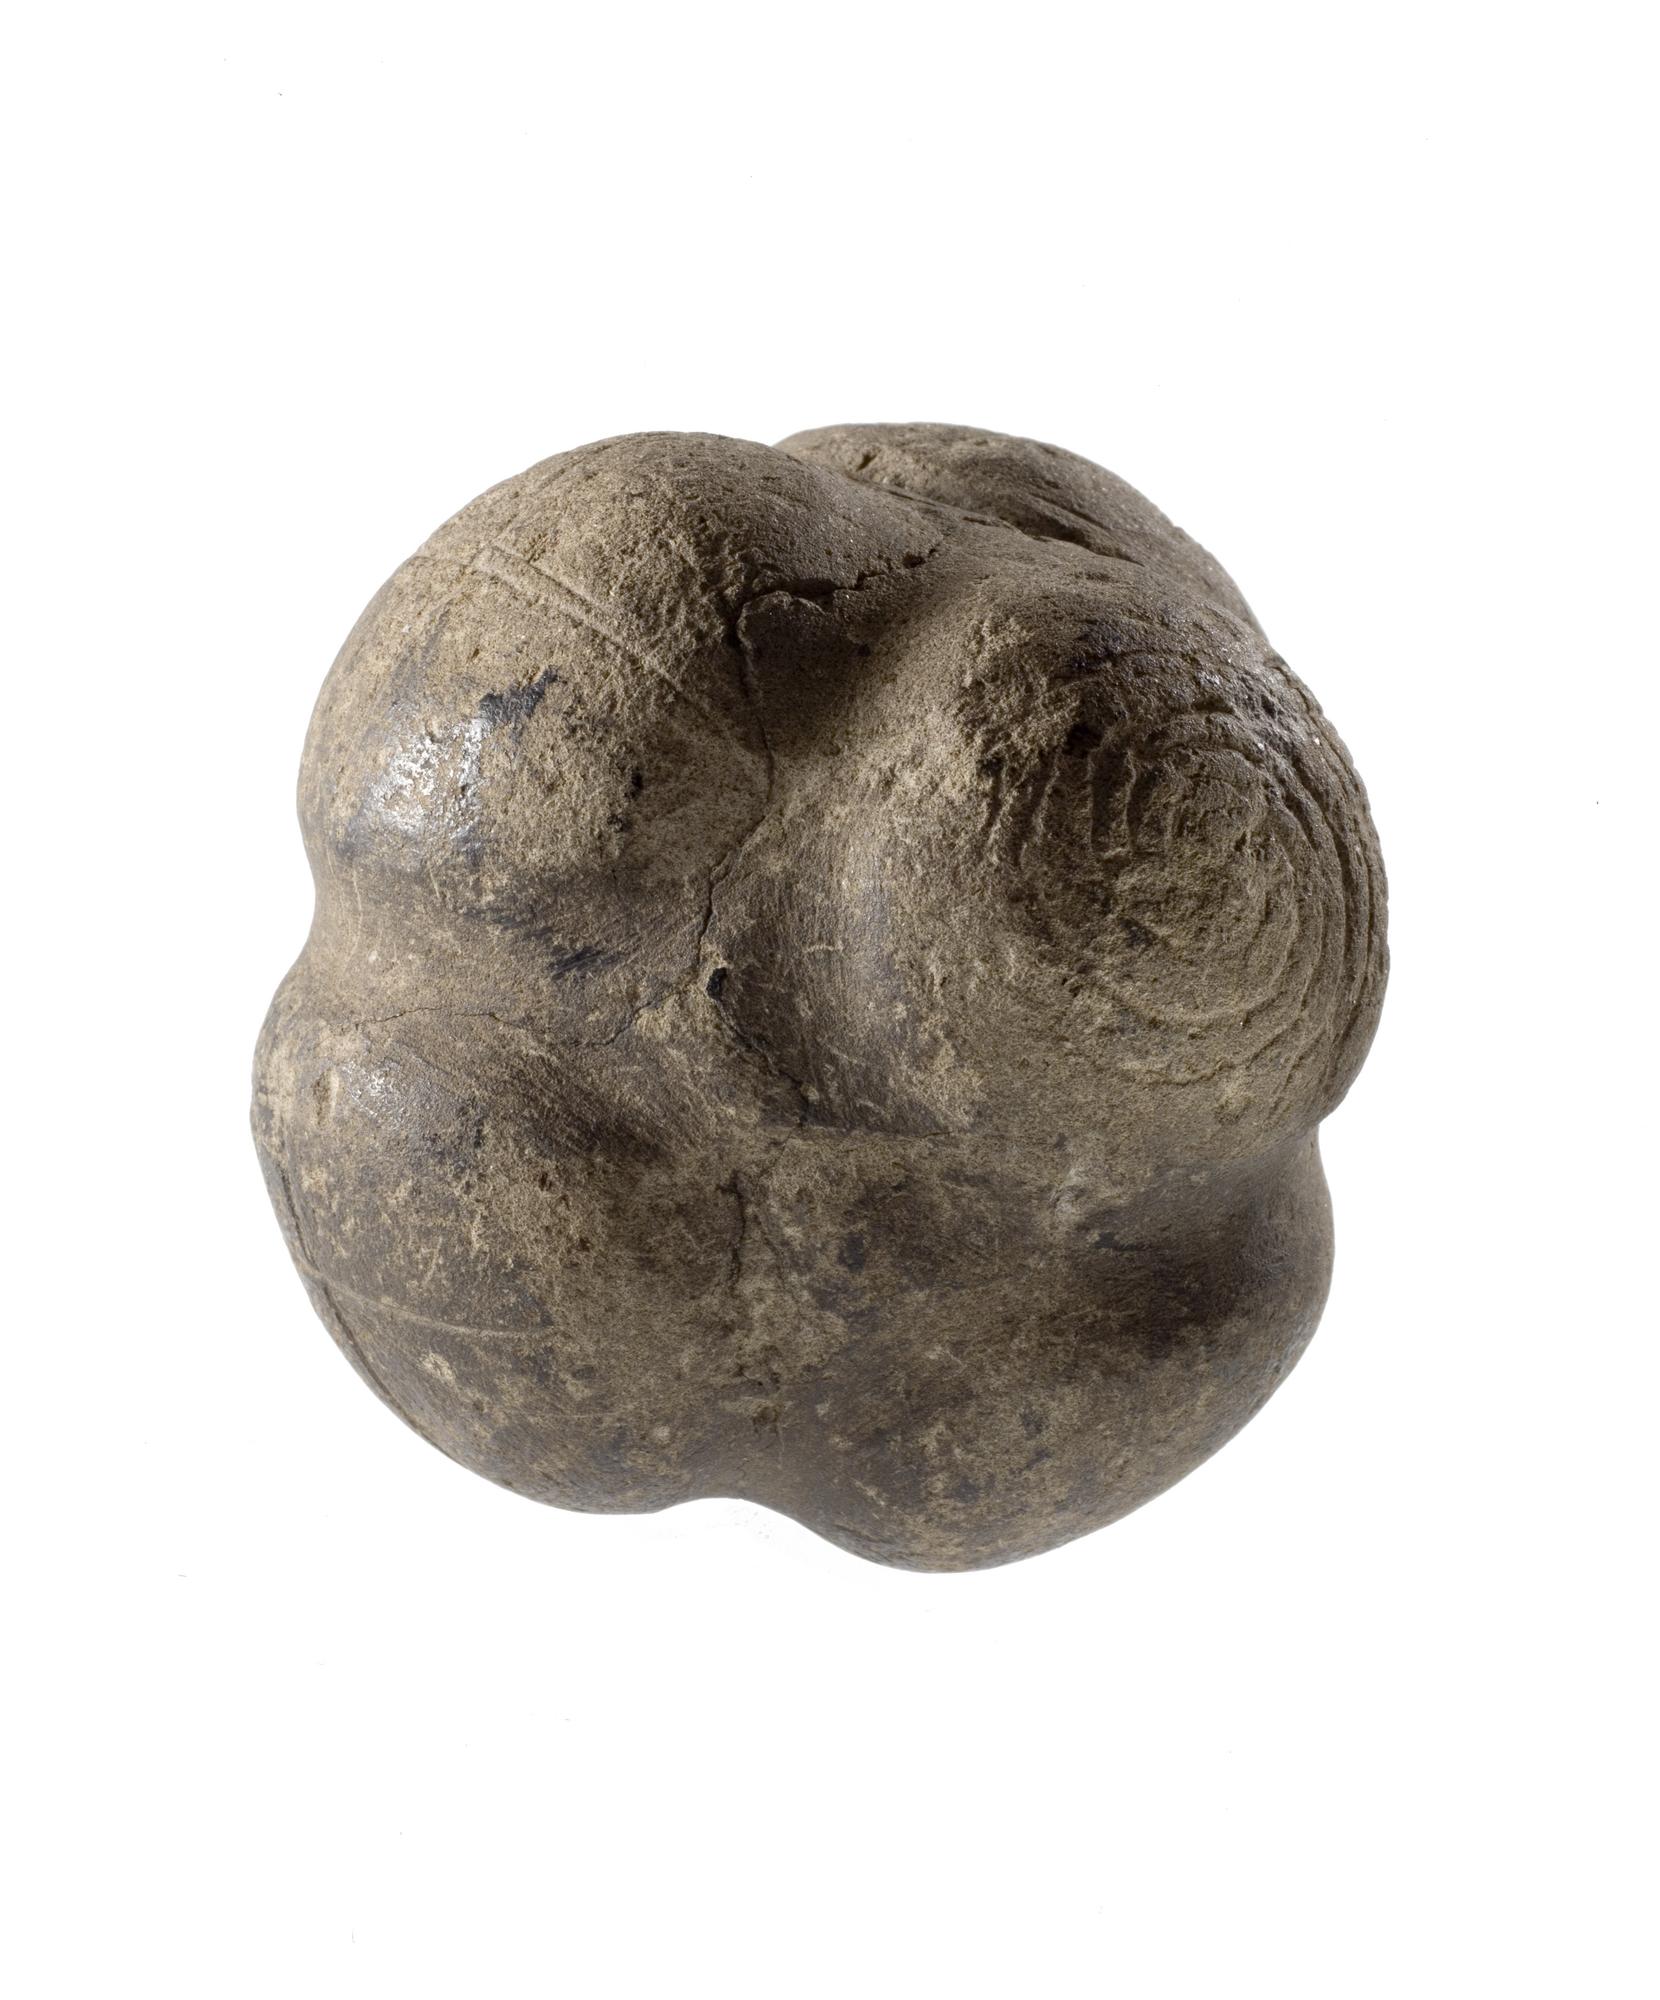 Carved stone ball, original findspot unknown, around 3000 BC.